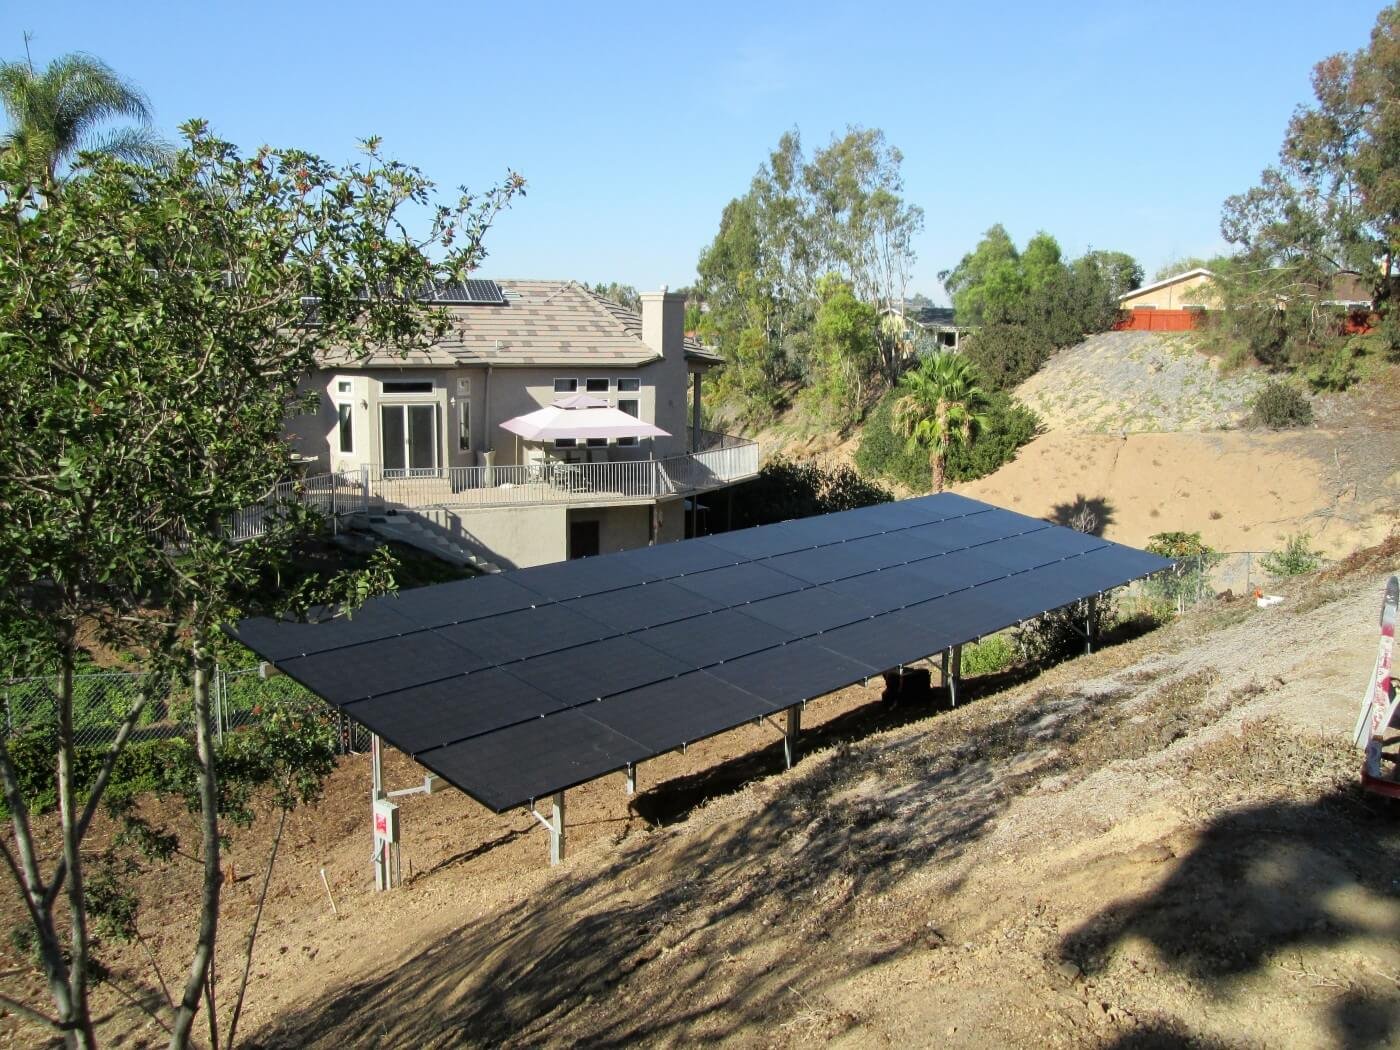 solar-panels-ground-mount-3961-tim-street-bonita-ca-91902-1.jpg